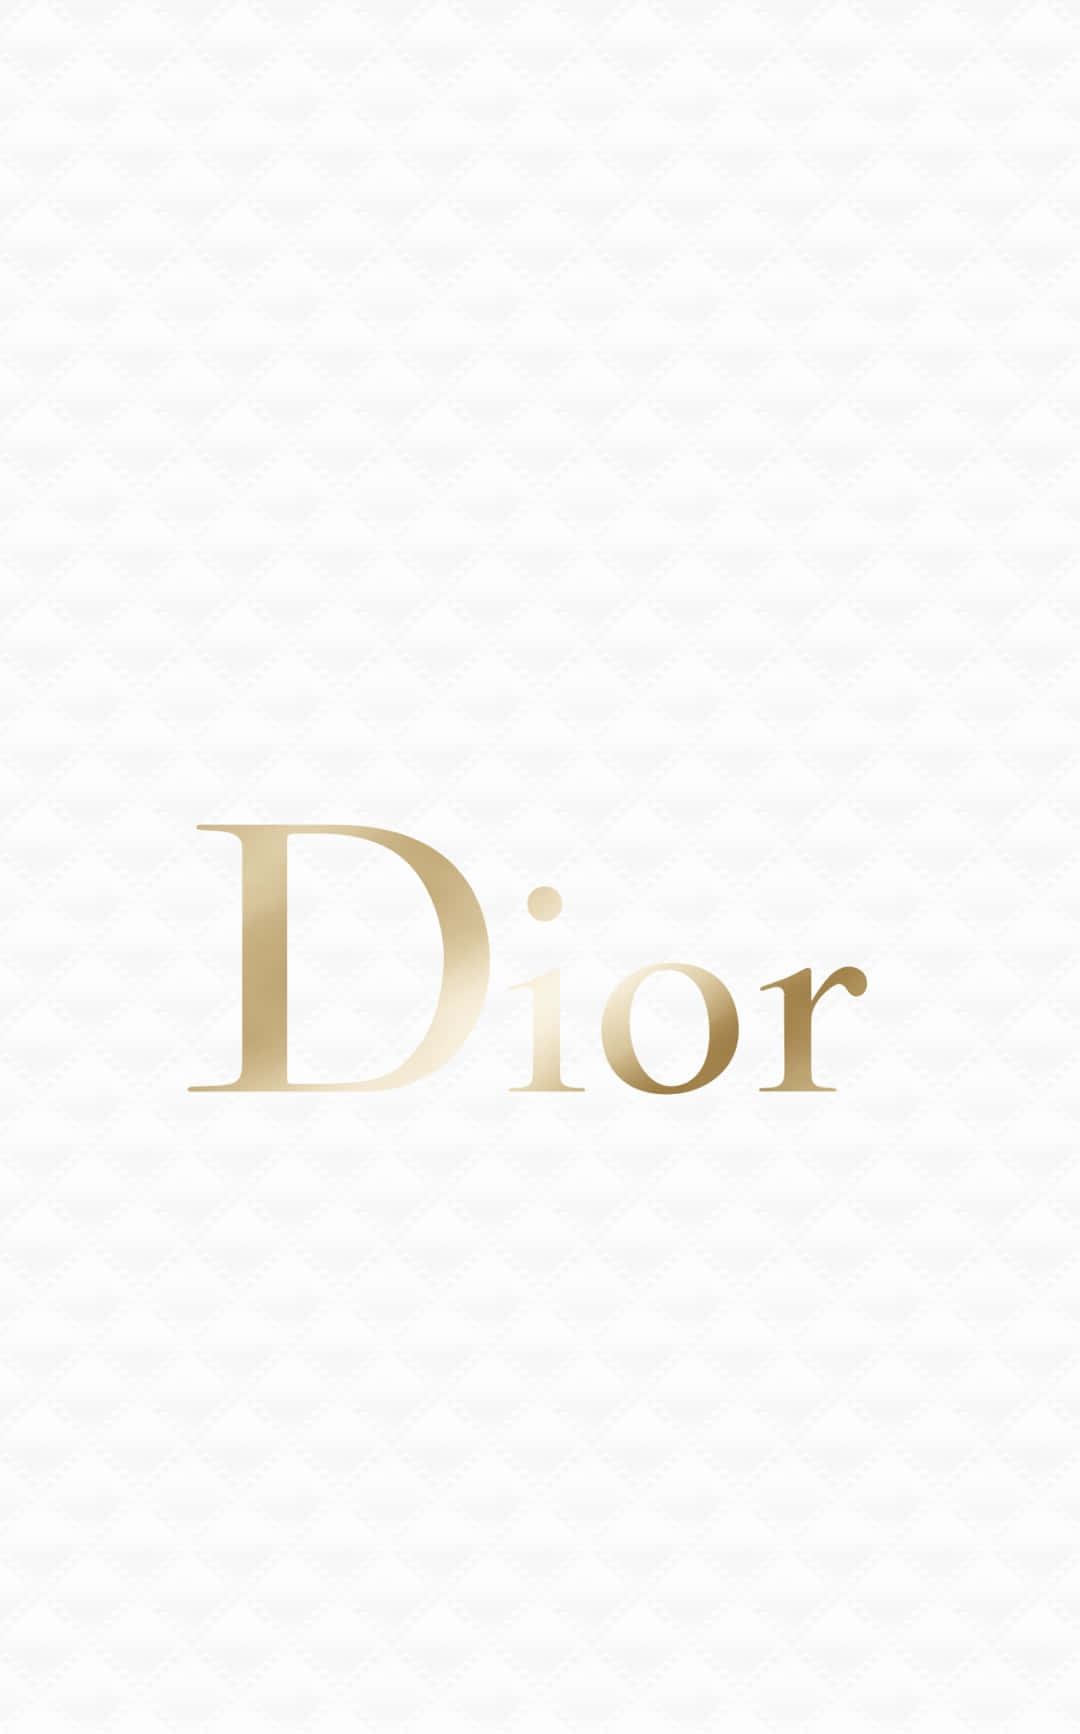 Dior Logoon Textured Background Wallpaper